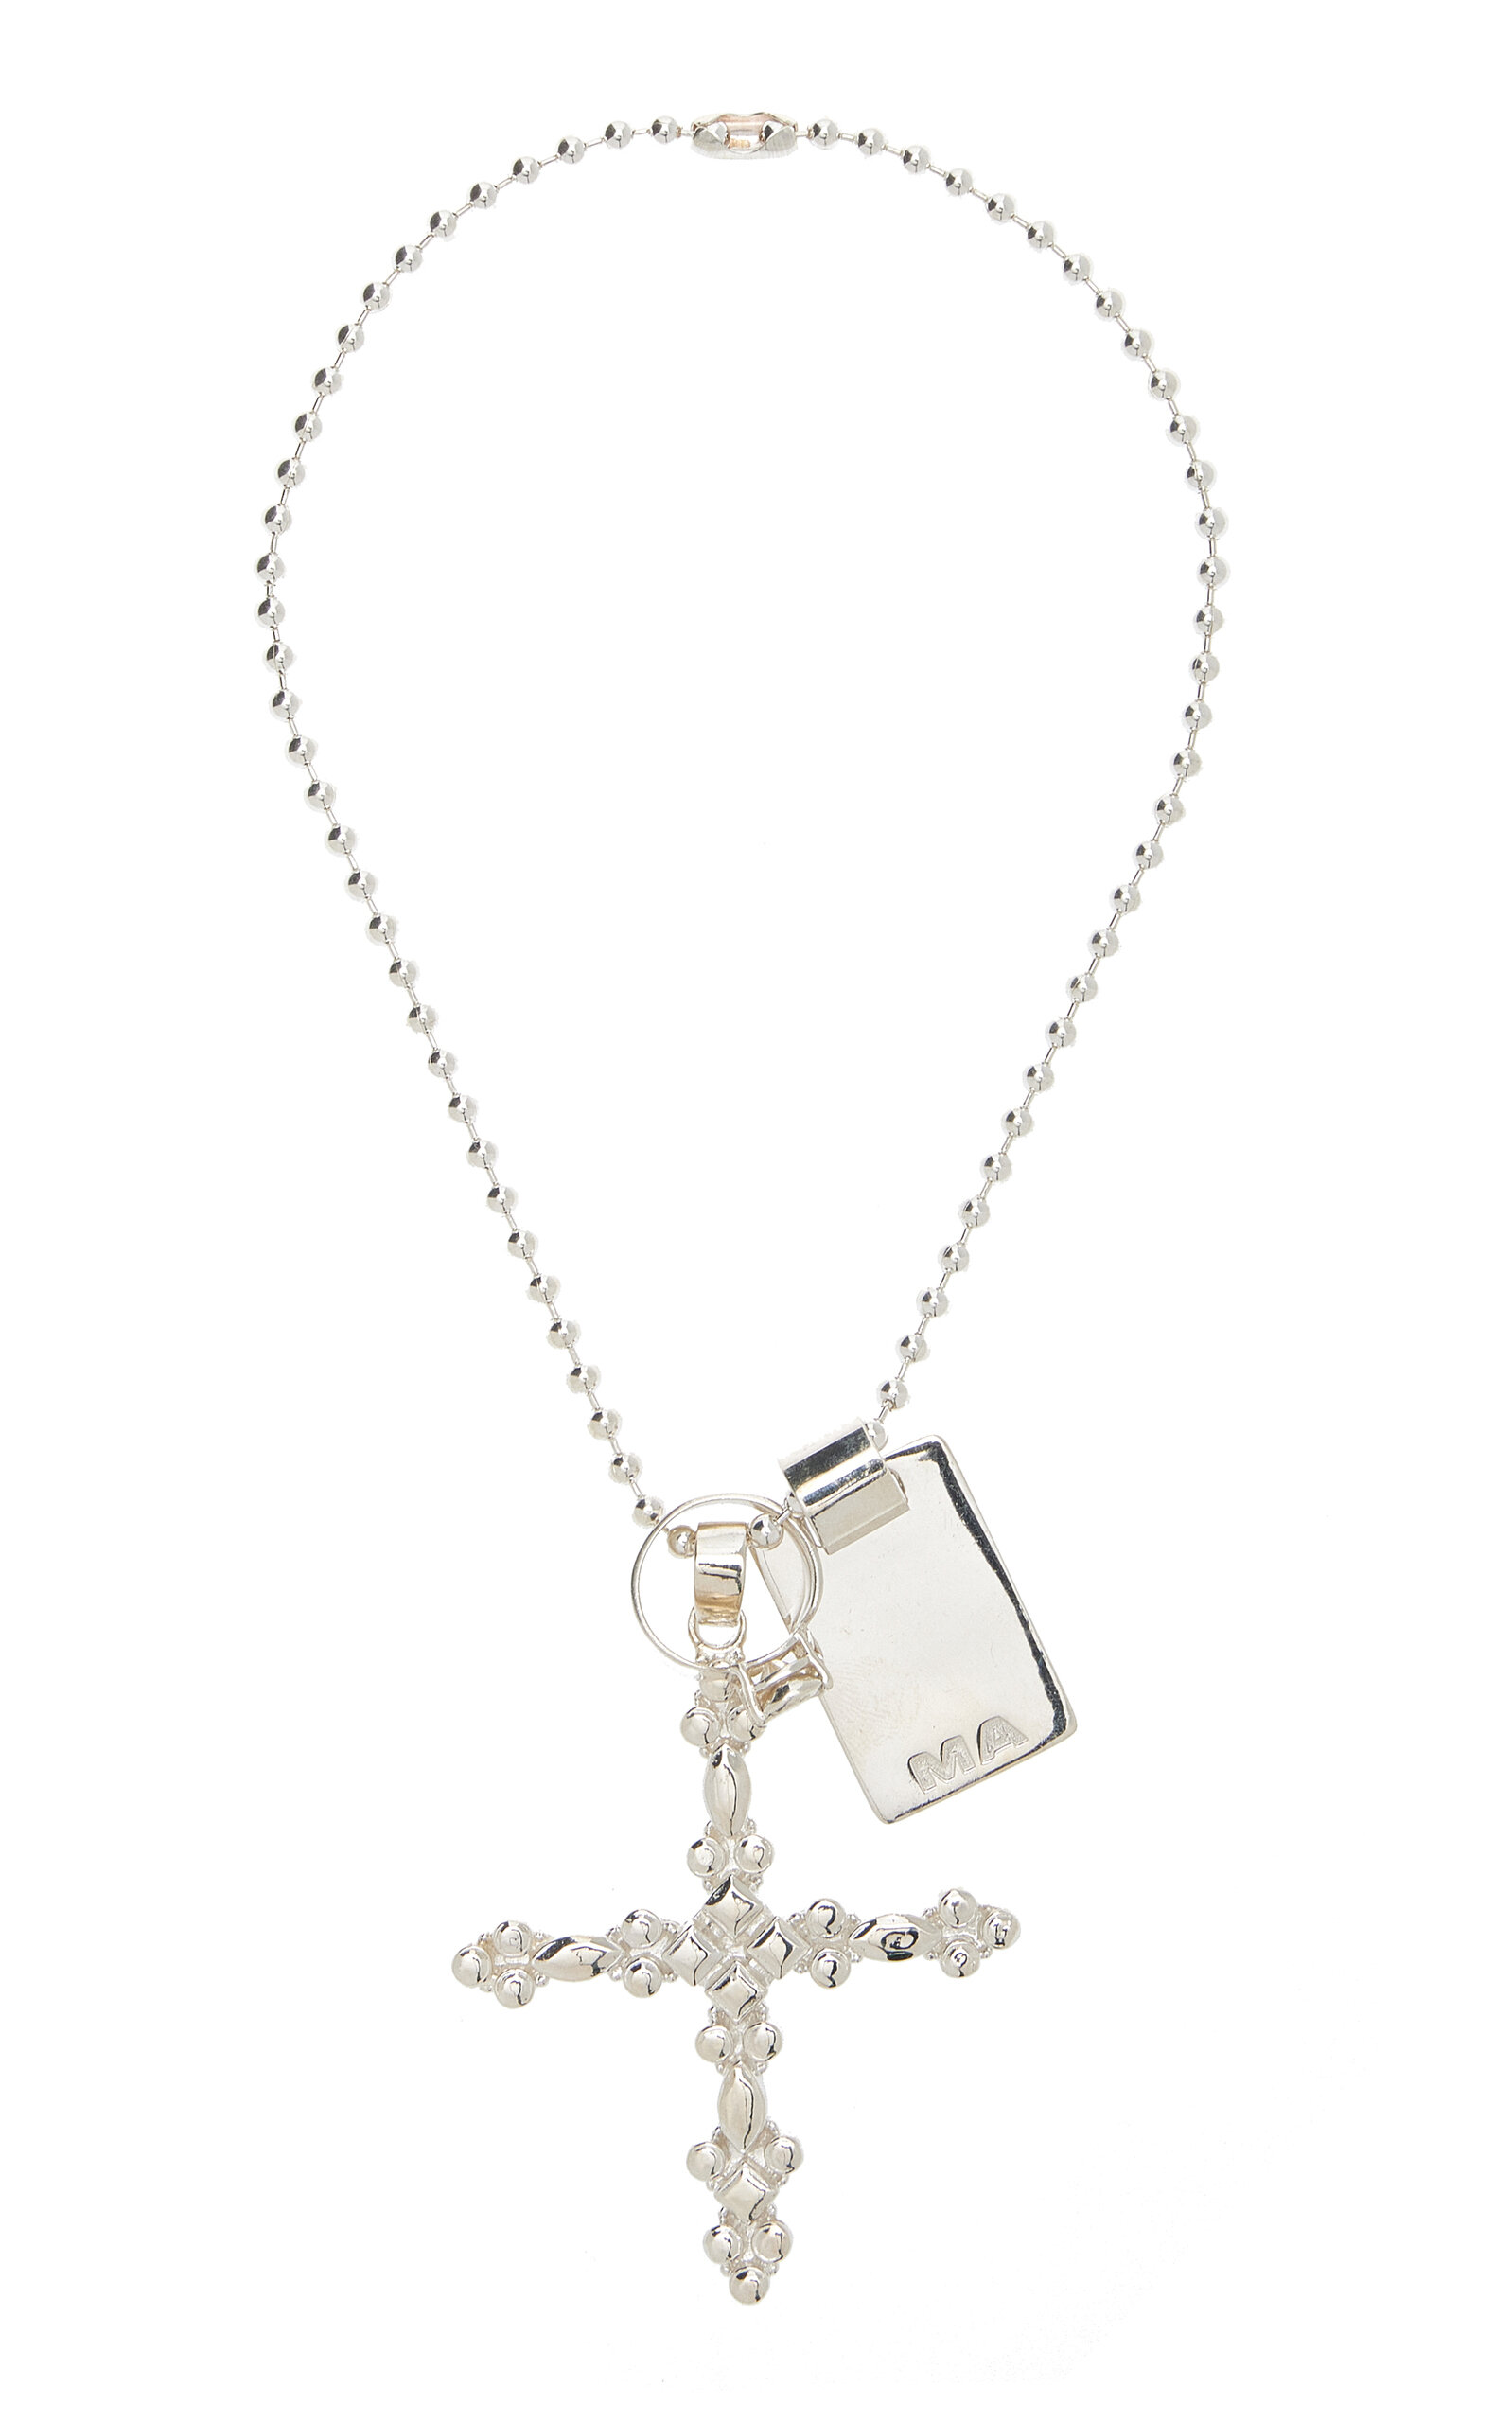 Martine Ali Women's Sandy Charm Sterling Silver Necklace | Smart